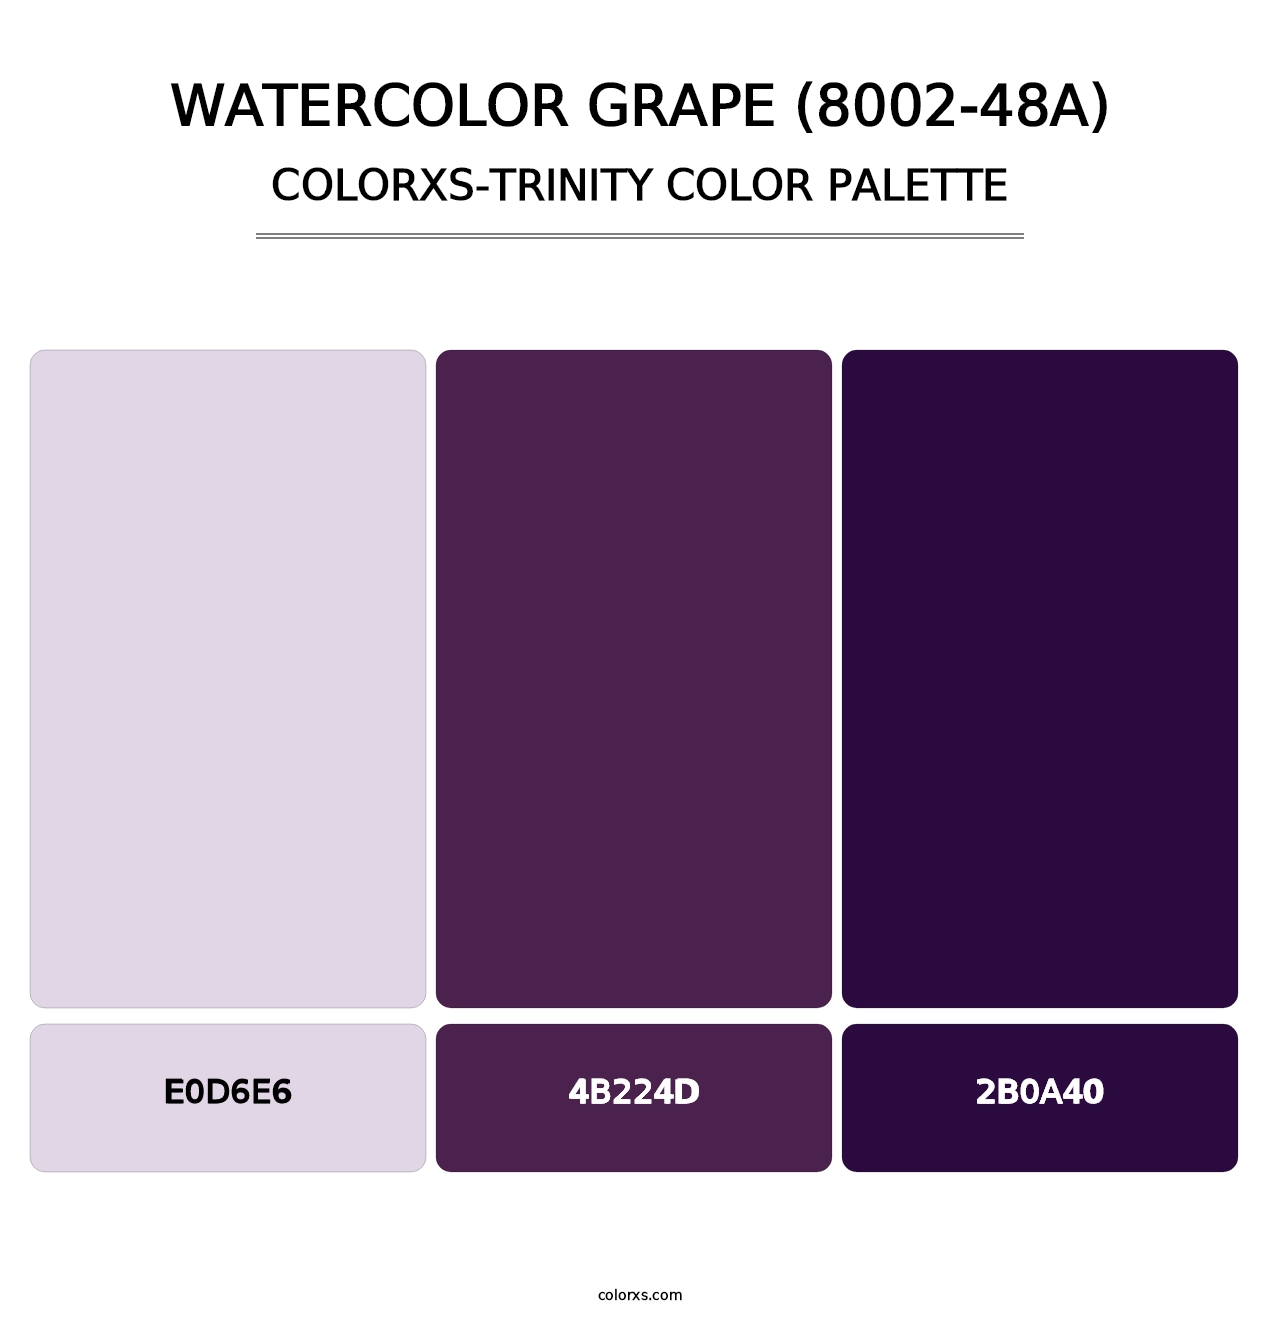 Watercolor Grape (8002-48A) - Colorxs Trinity Palette